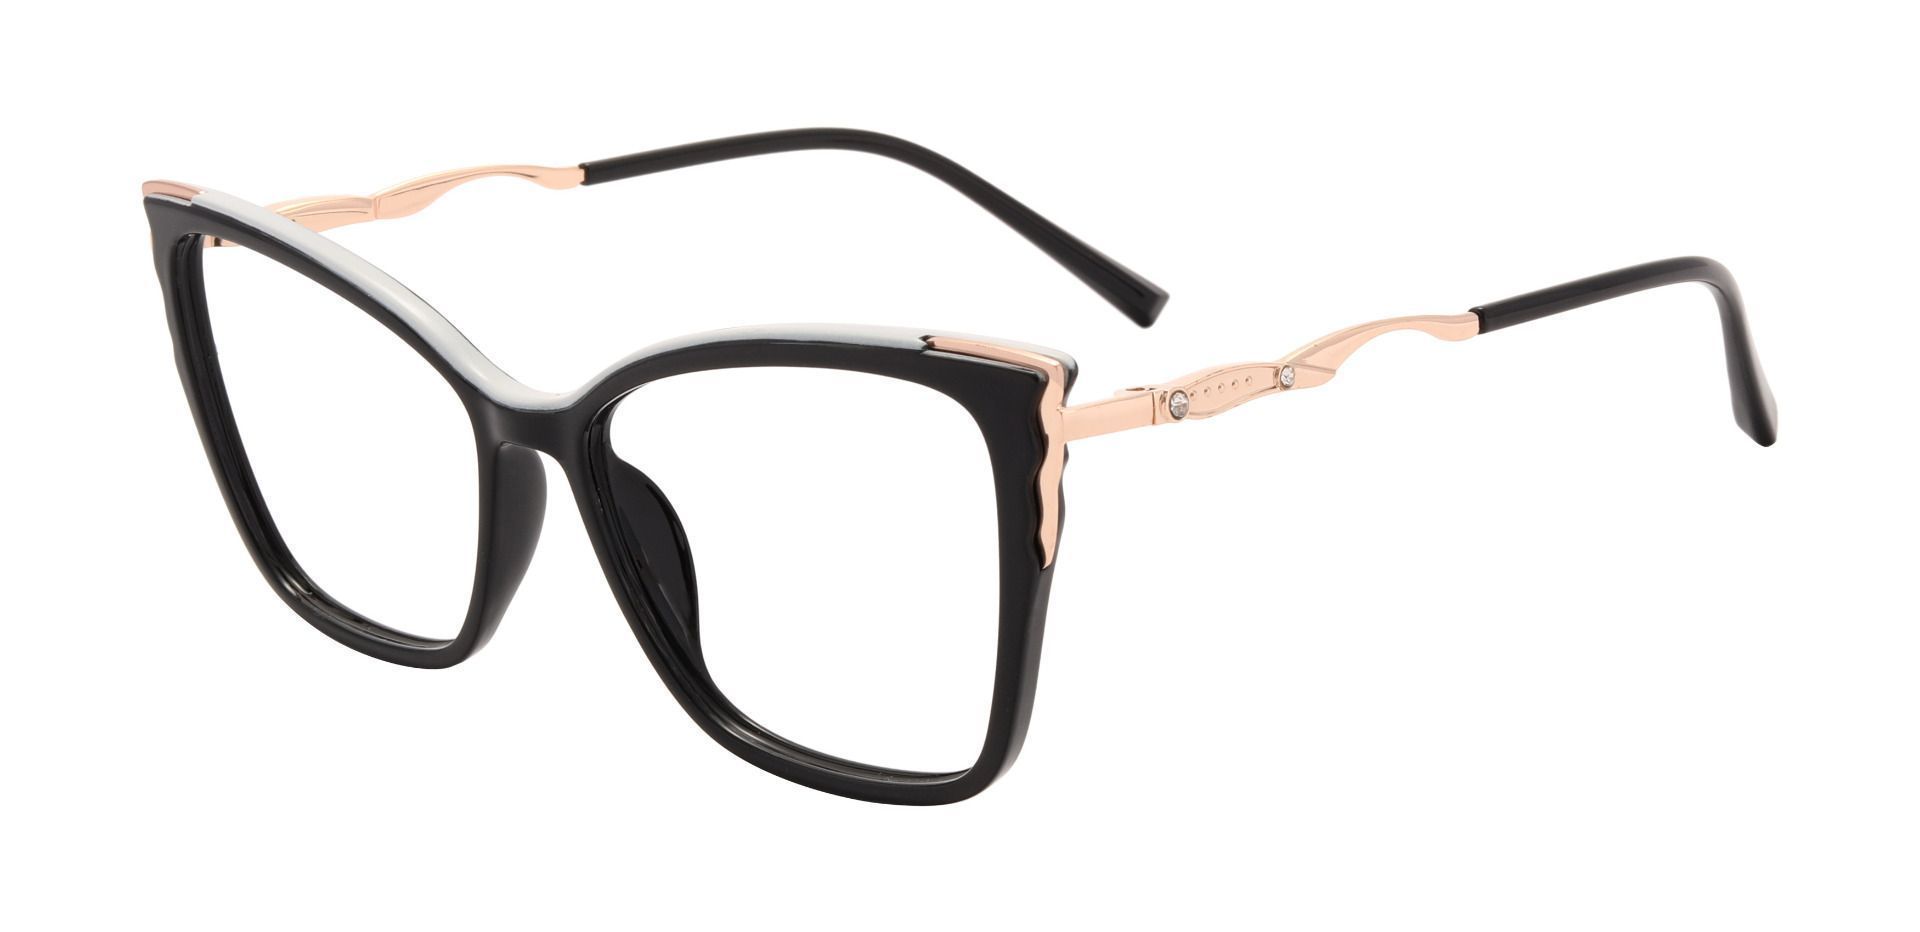 Guadalupe Cat Eye Prescription Glasses - Black